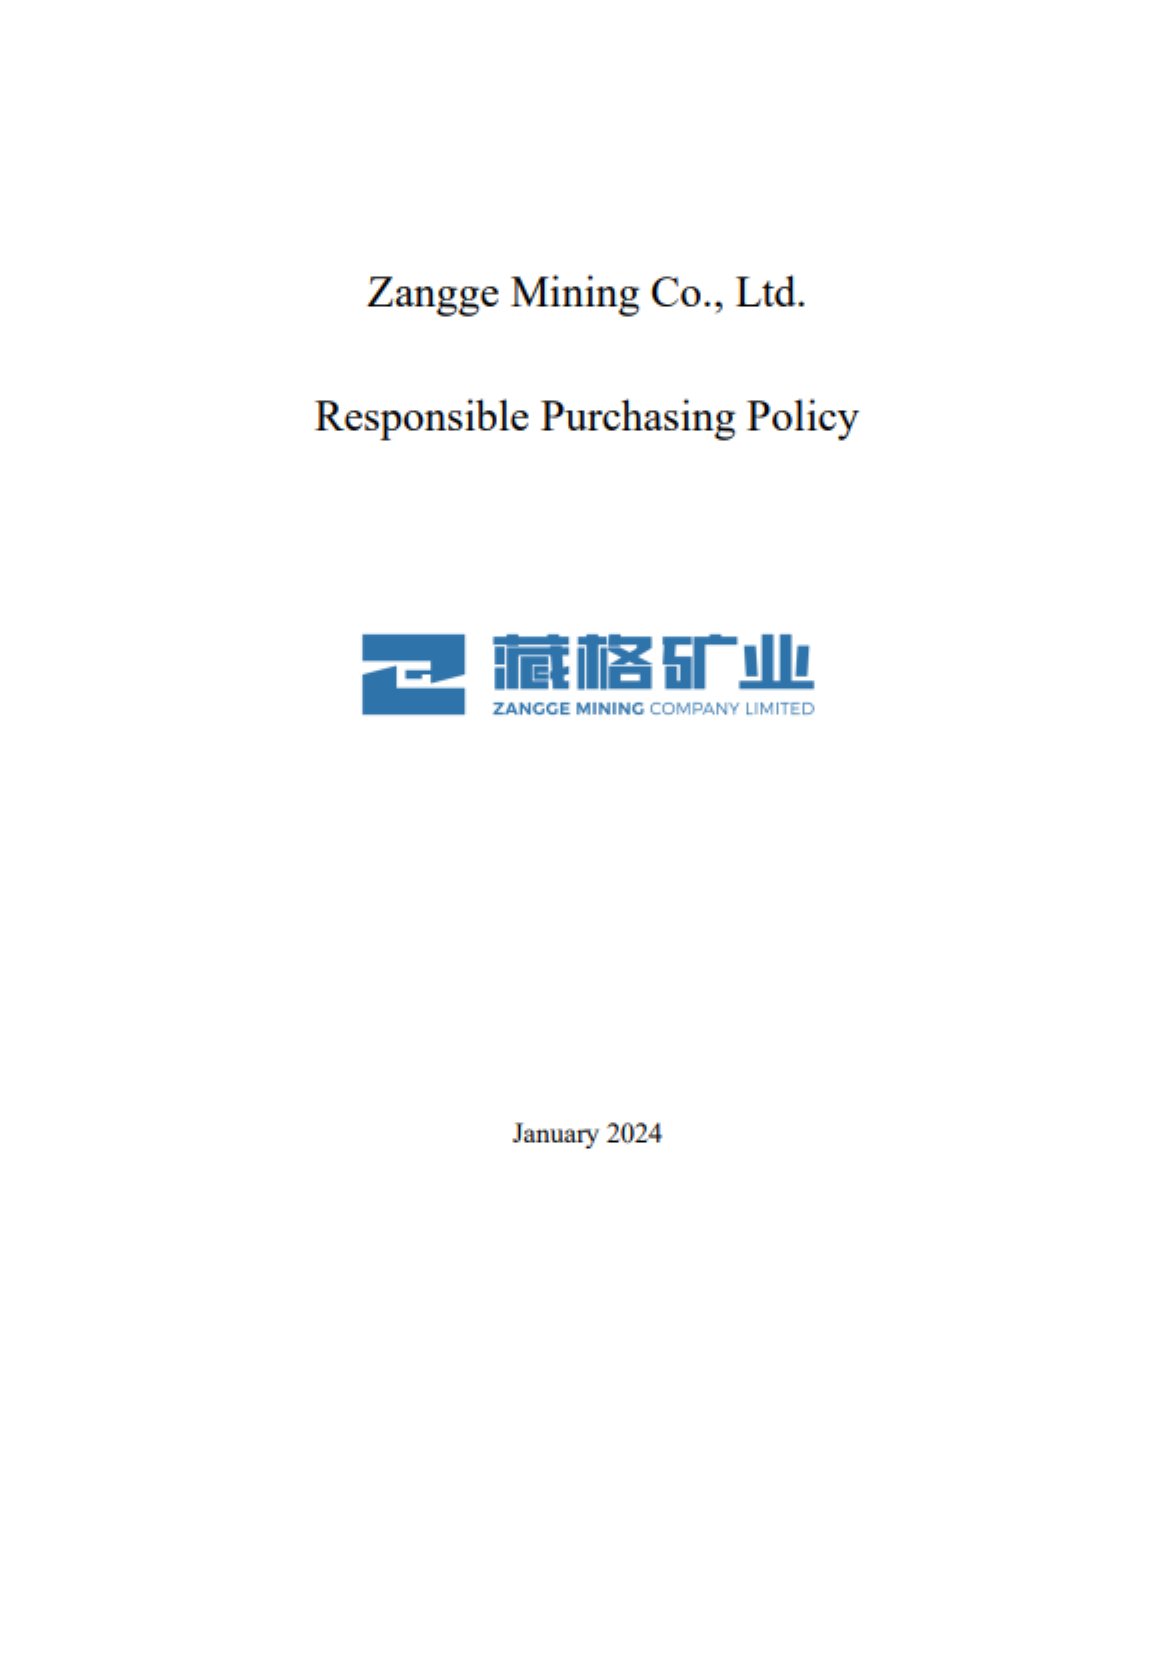 Responsible Purchasing Policy of Zangge Mining Co., Ltd.